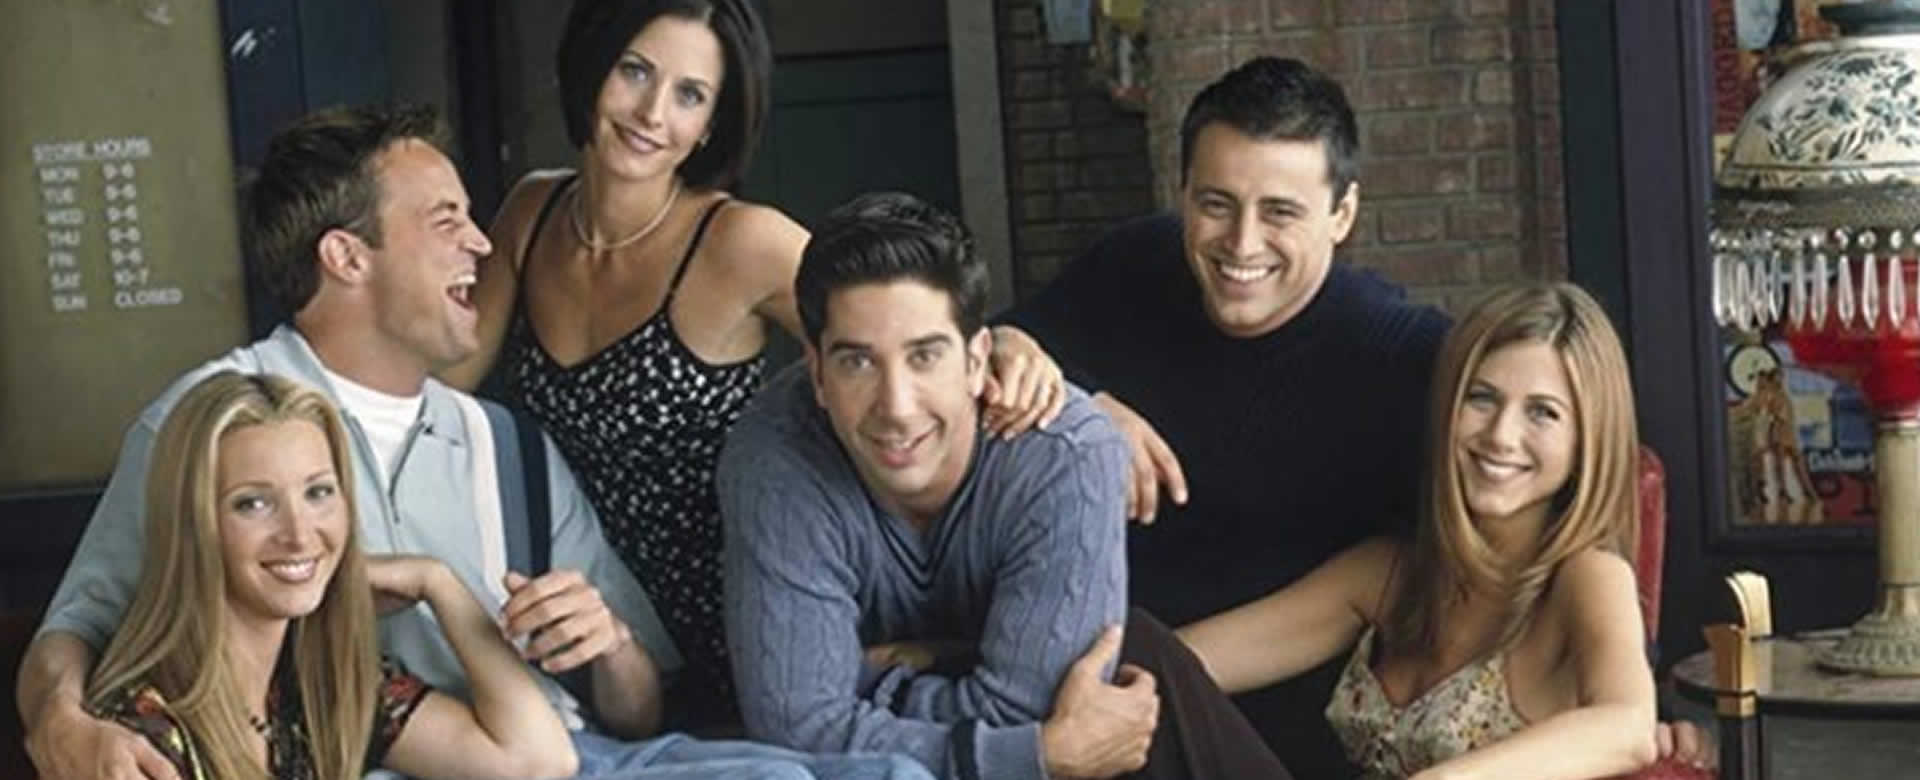 Regresa la popular serie “Friends” con un episodio especial